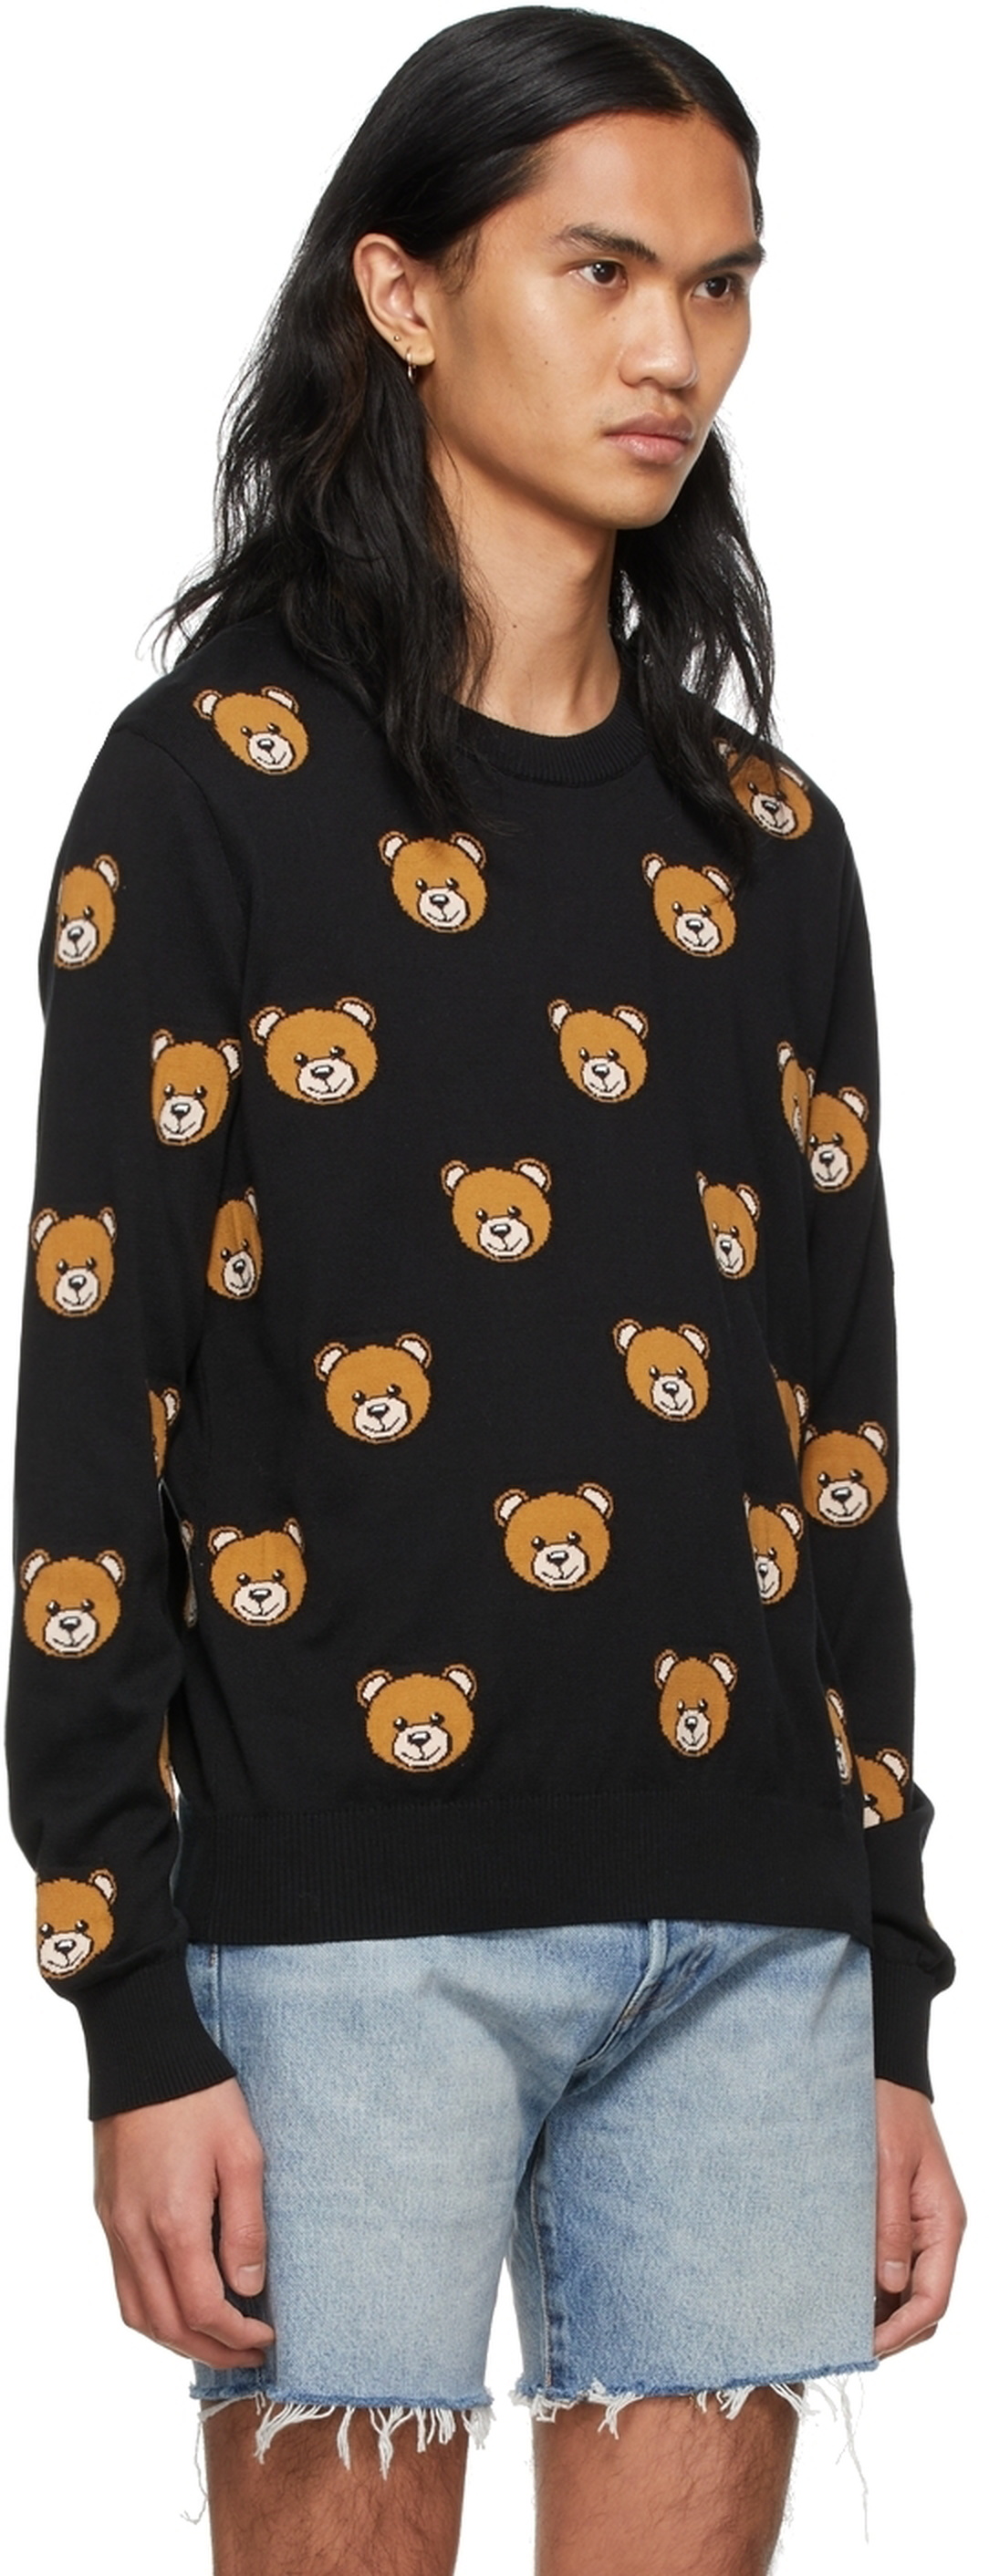 Black Teddy Bear Sweater - Antonia